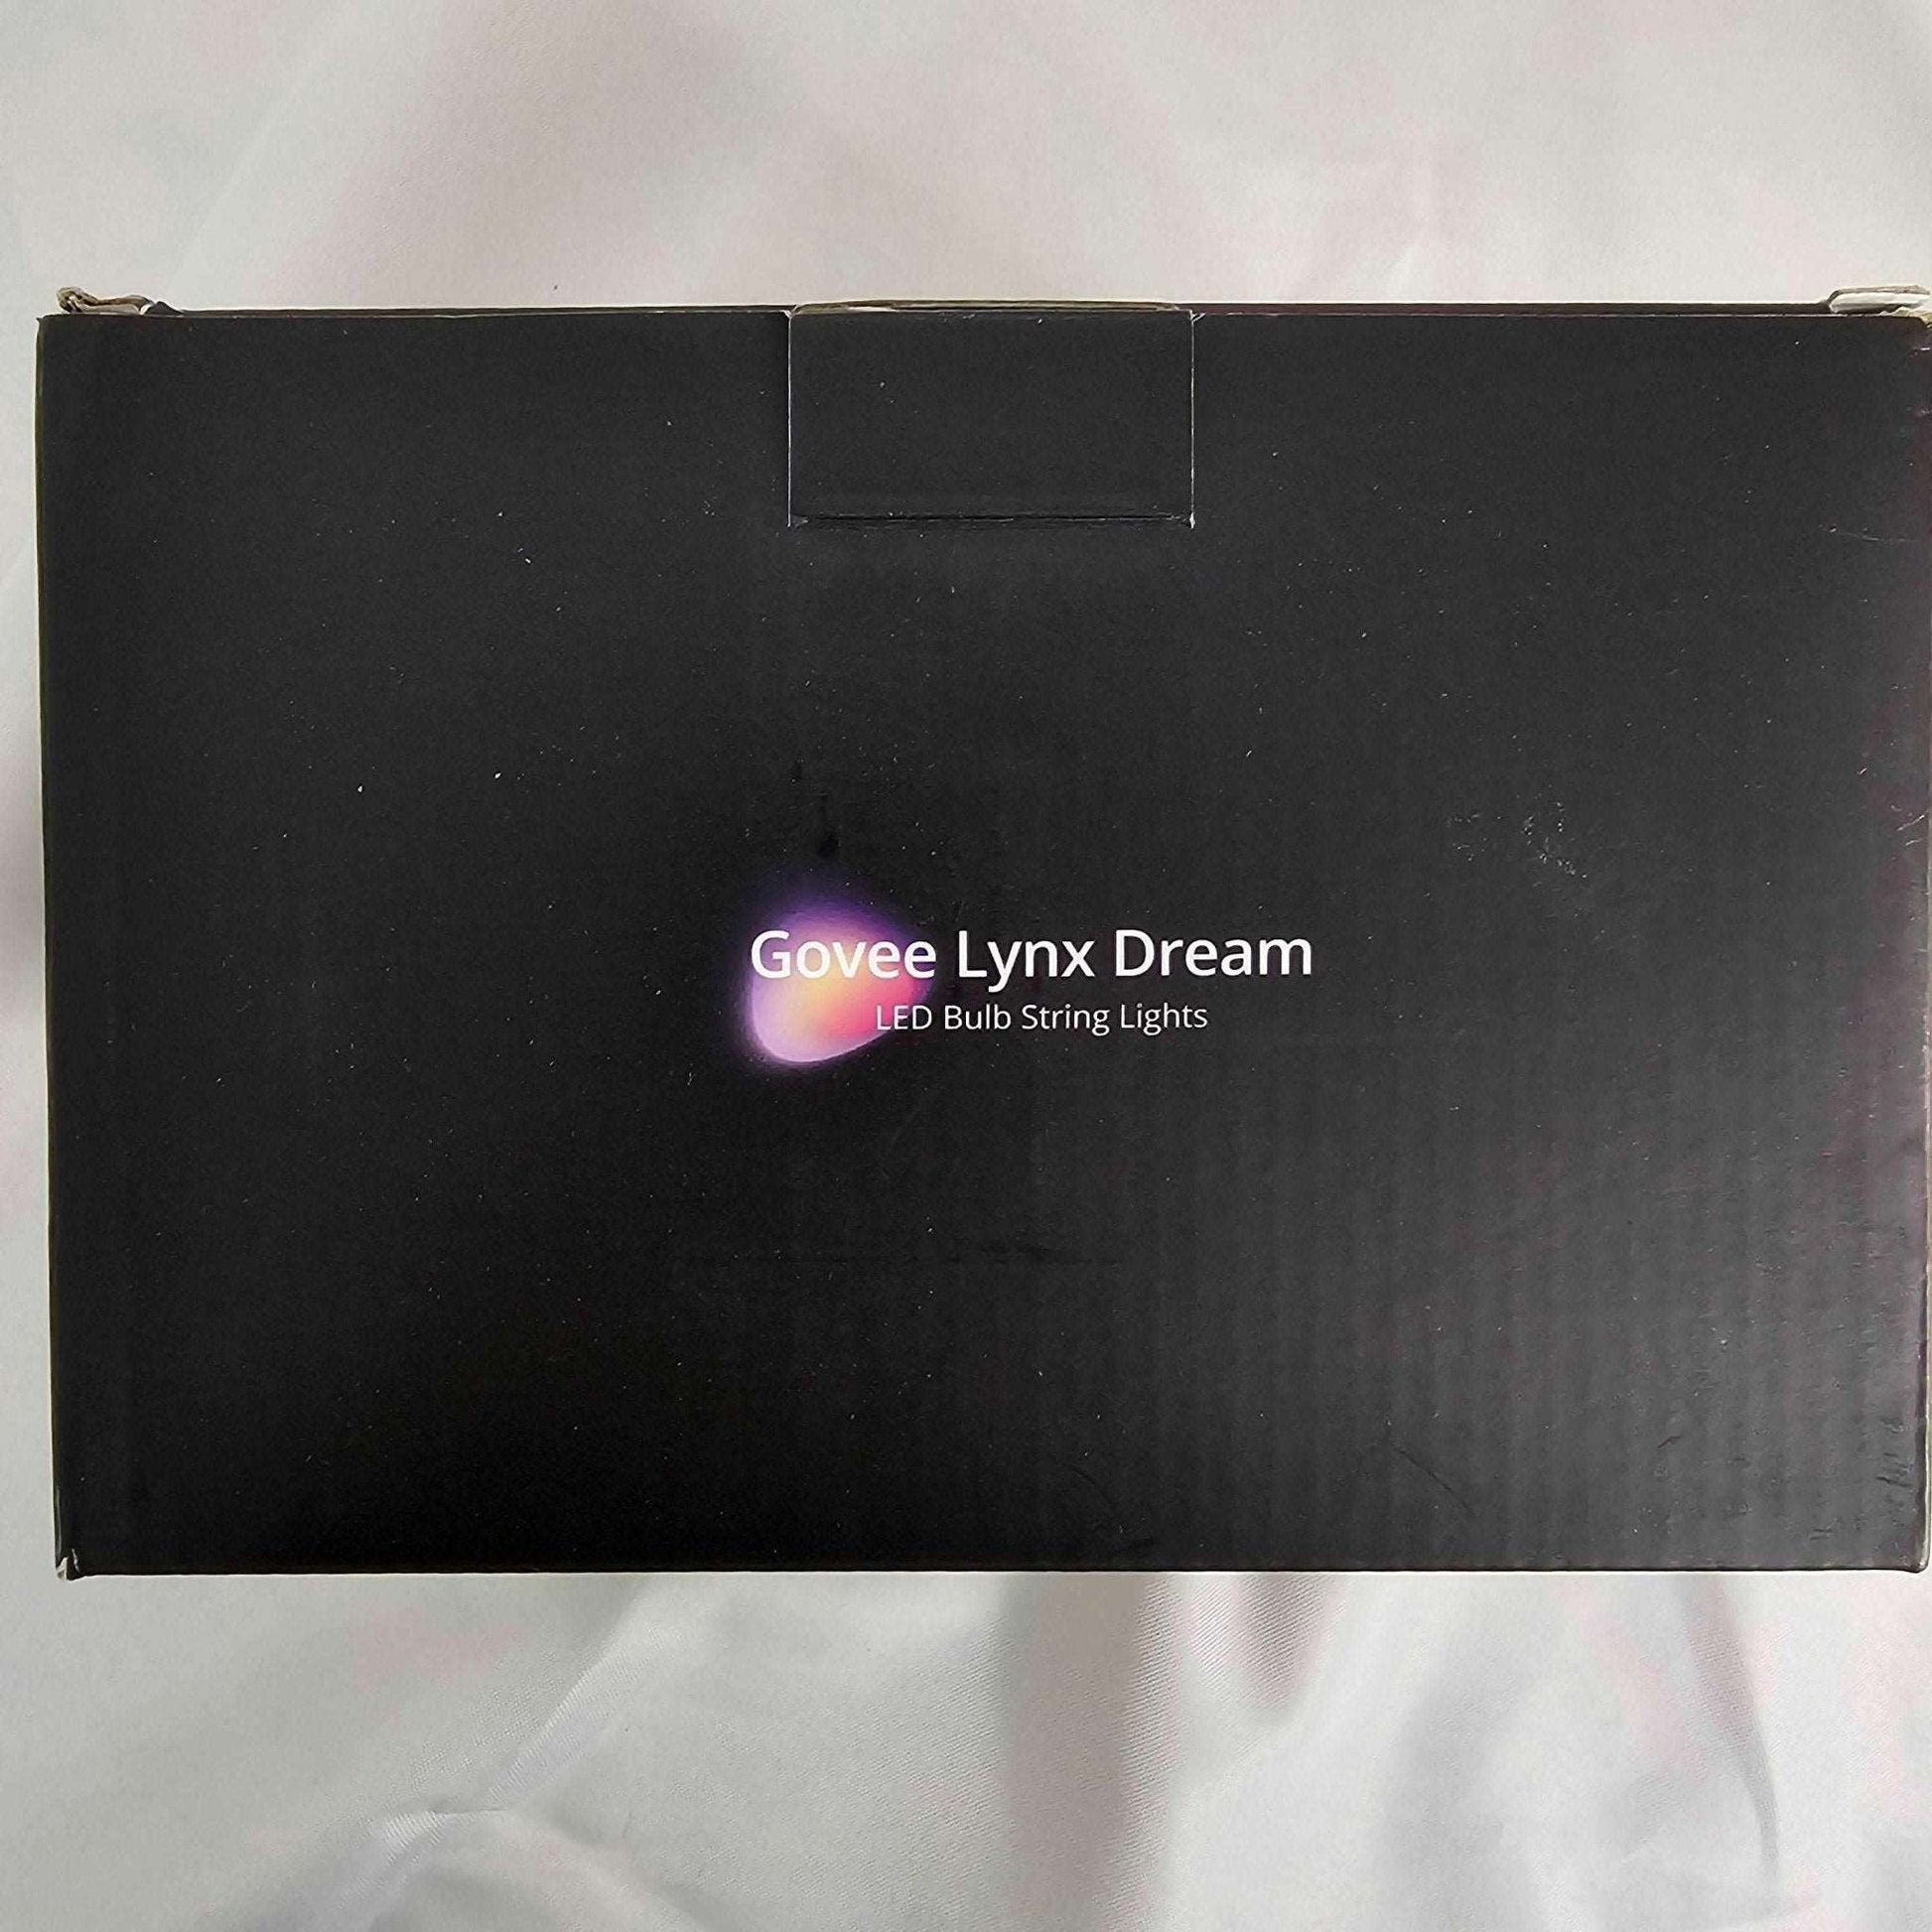 LED Bulb String Lights 48 ft Govee Lynx Dream H7020 - DQ Distribution